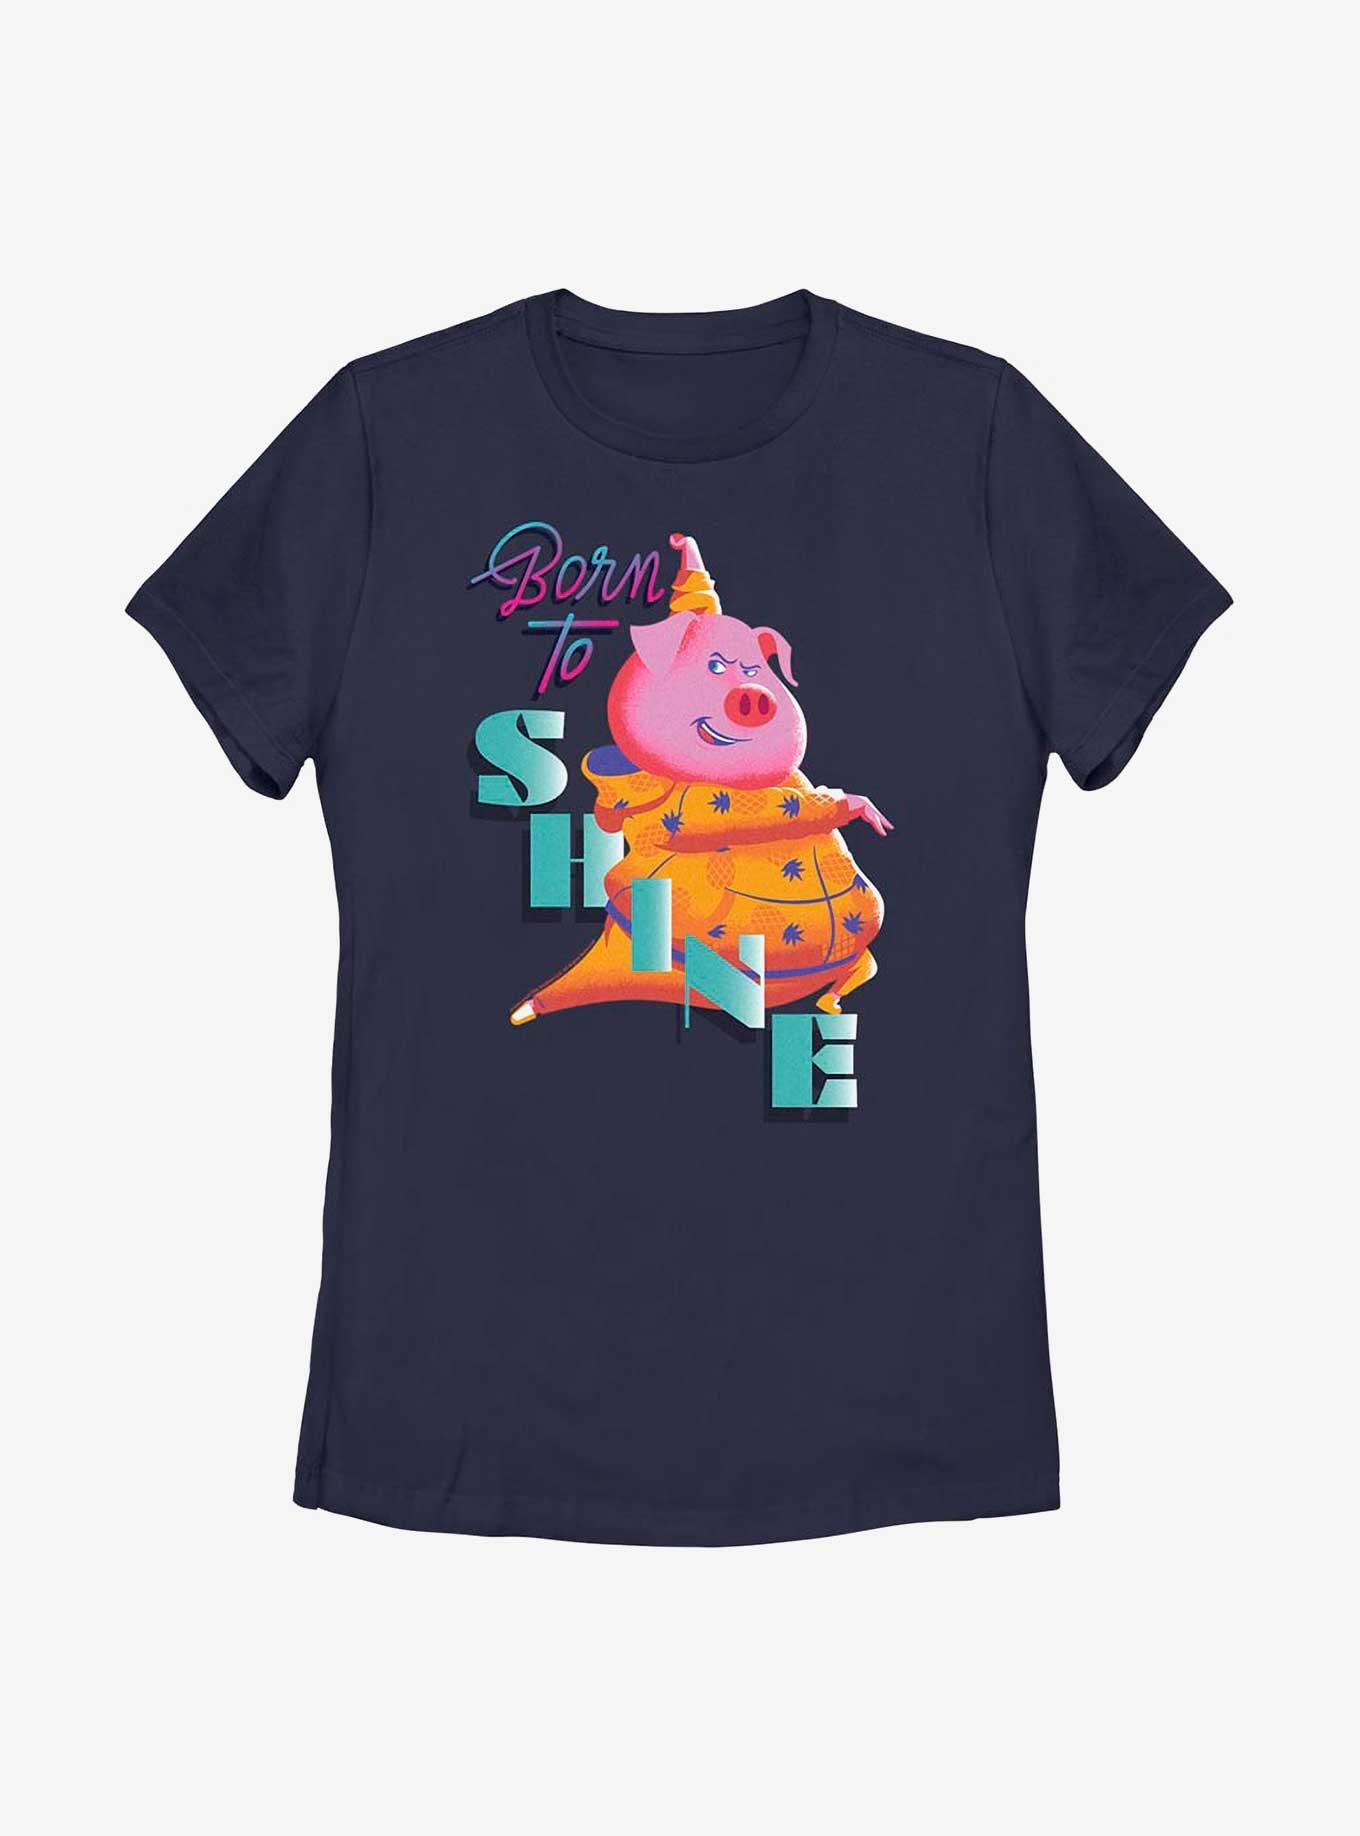 Sing Born To Shine T-Shirt, NAVY, hi-res